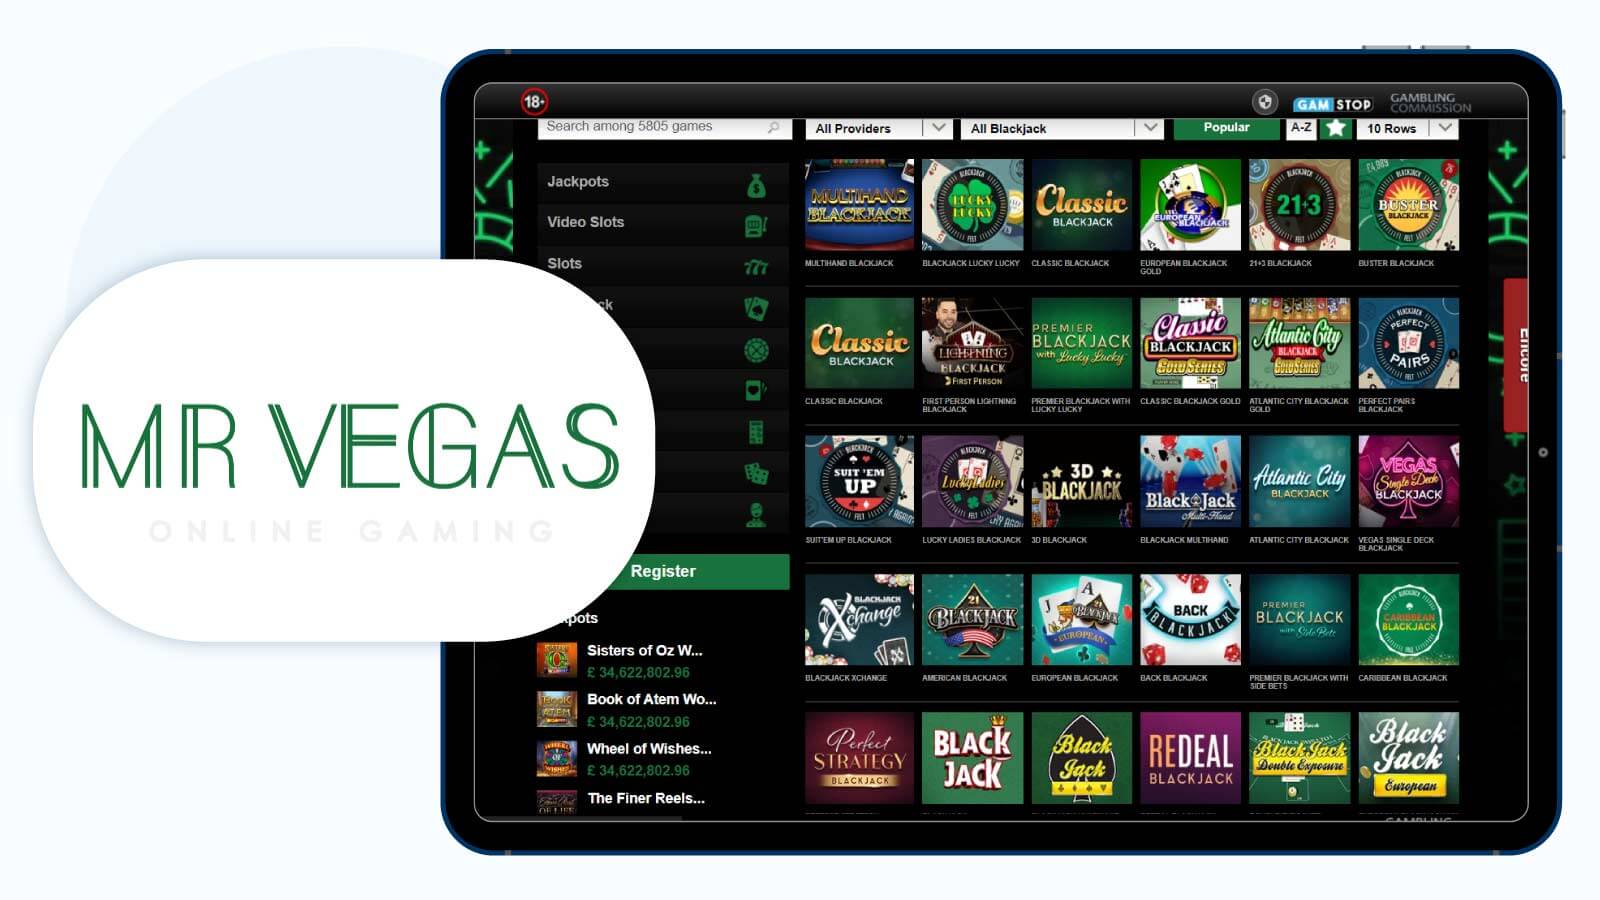 MrVegas Casino - best casino with live blackjack streaming